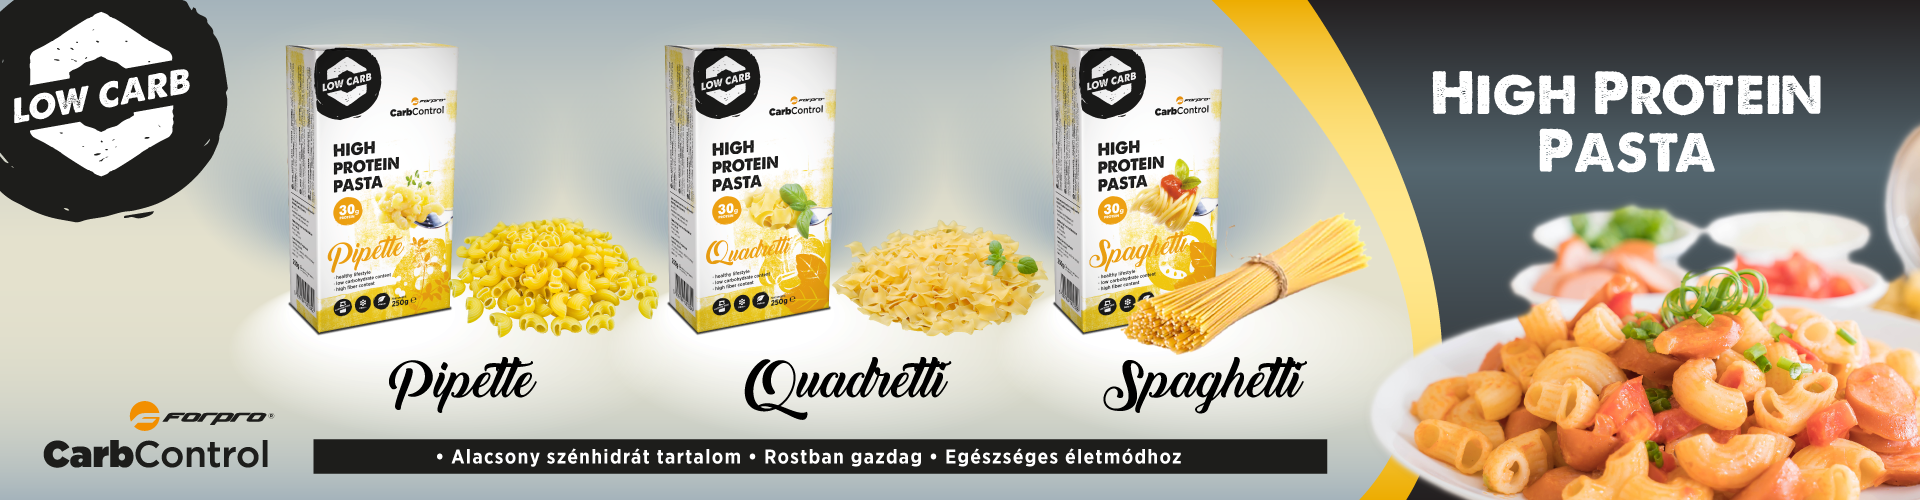 ForPro High Protein Pasta protein tészták